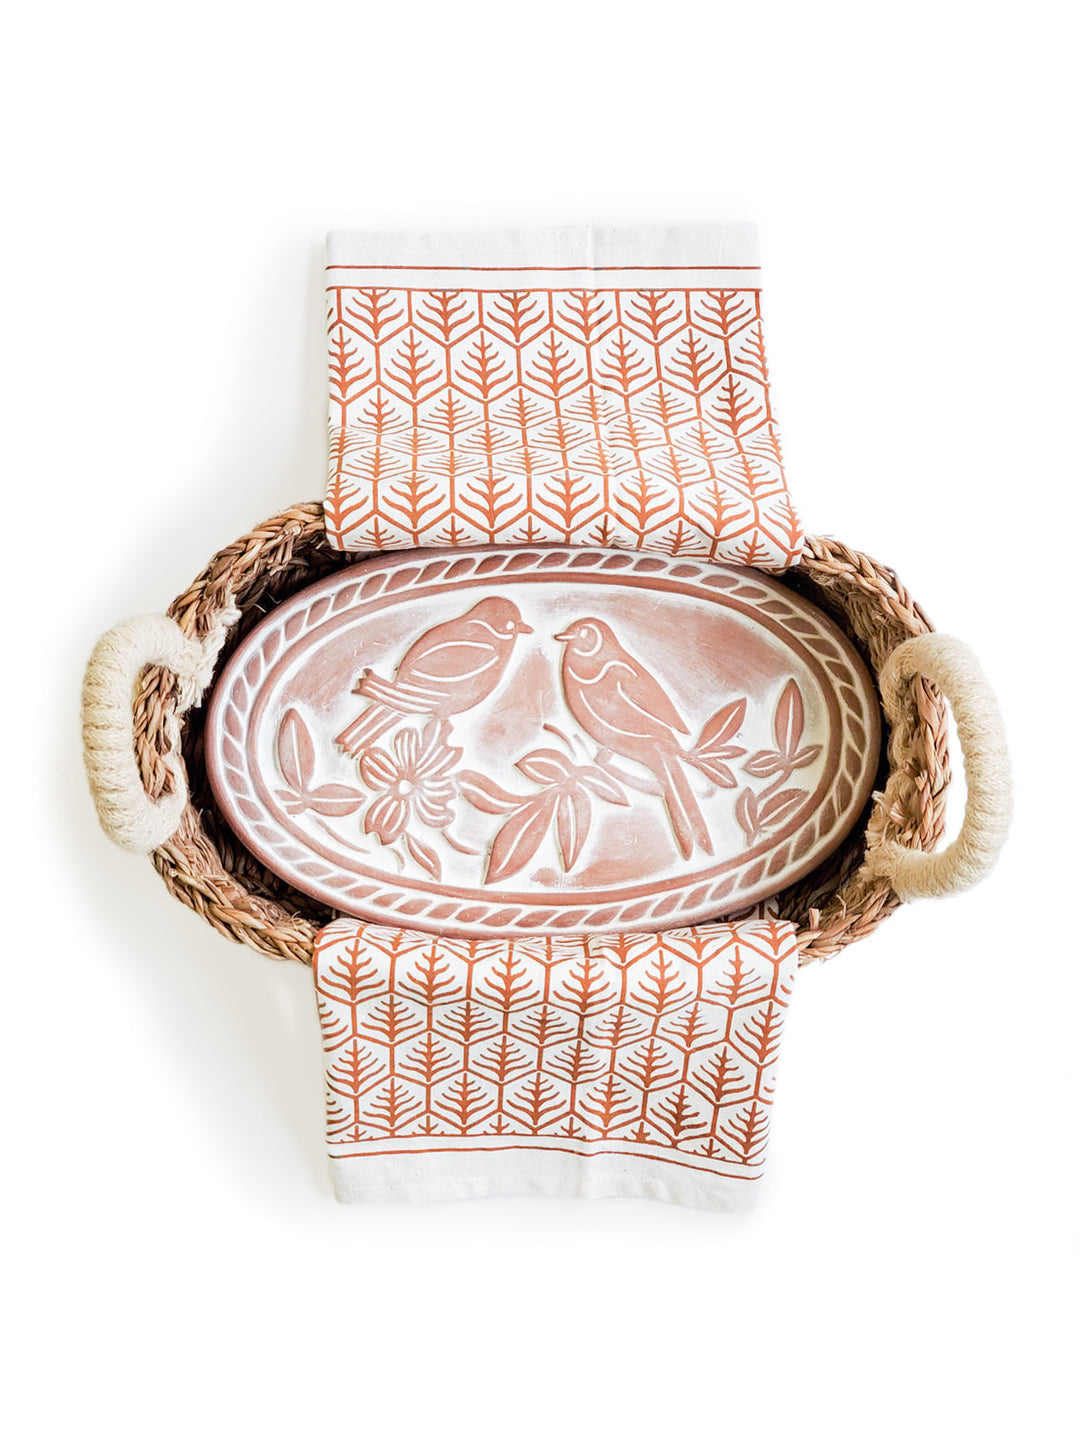 Bread Warmer & Basket Gift Set with Tea Towel - Lovebird Oval-5